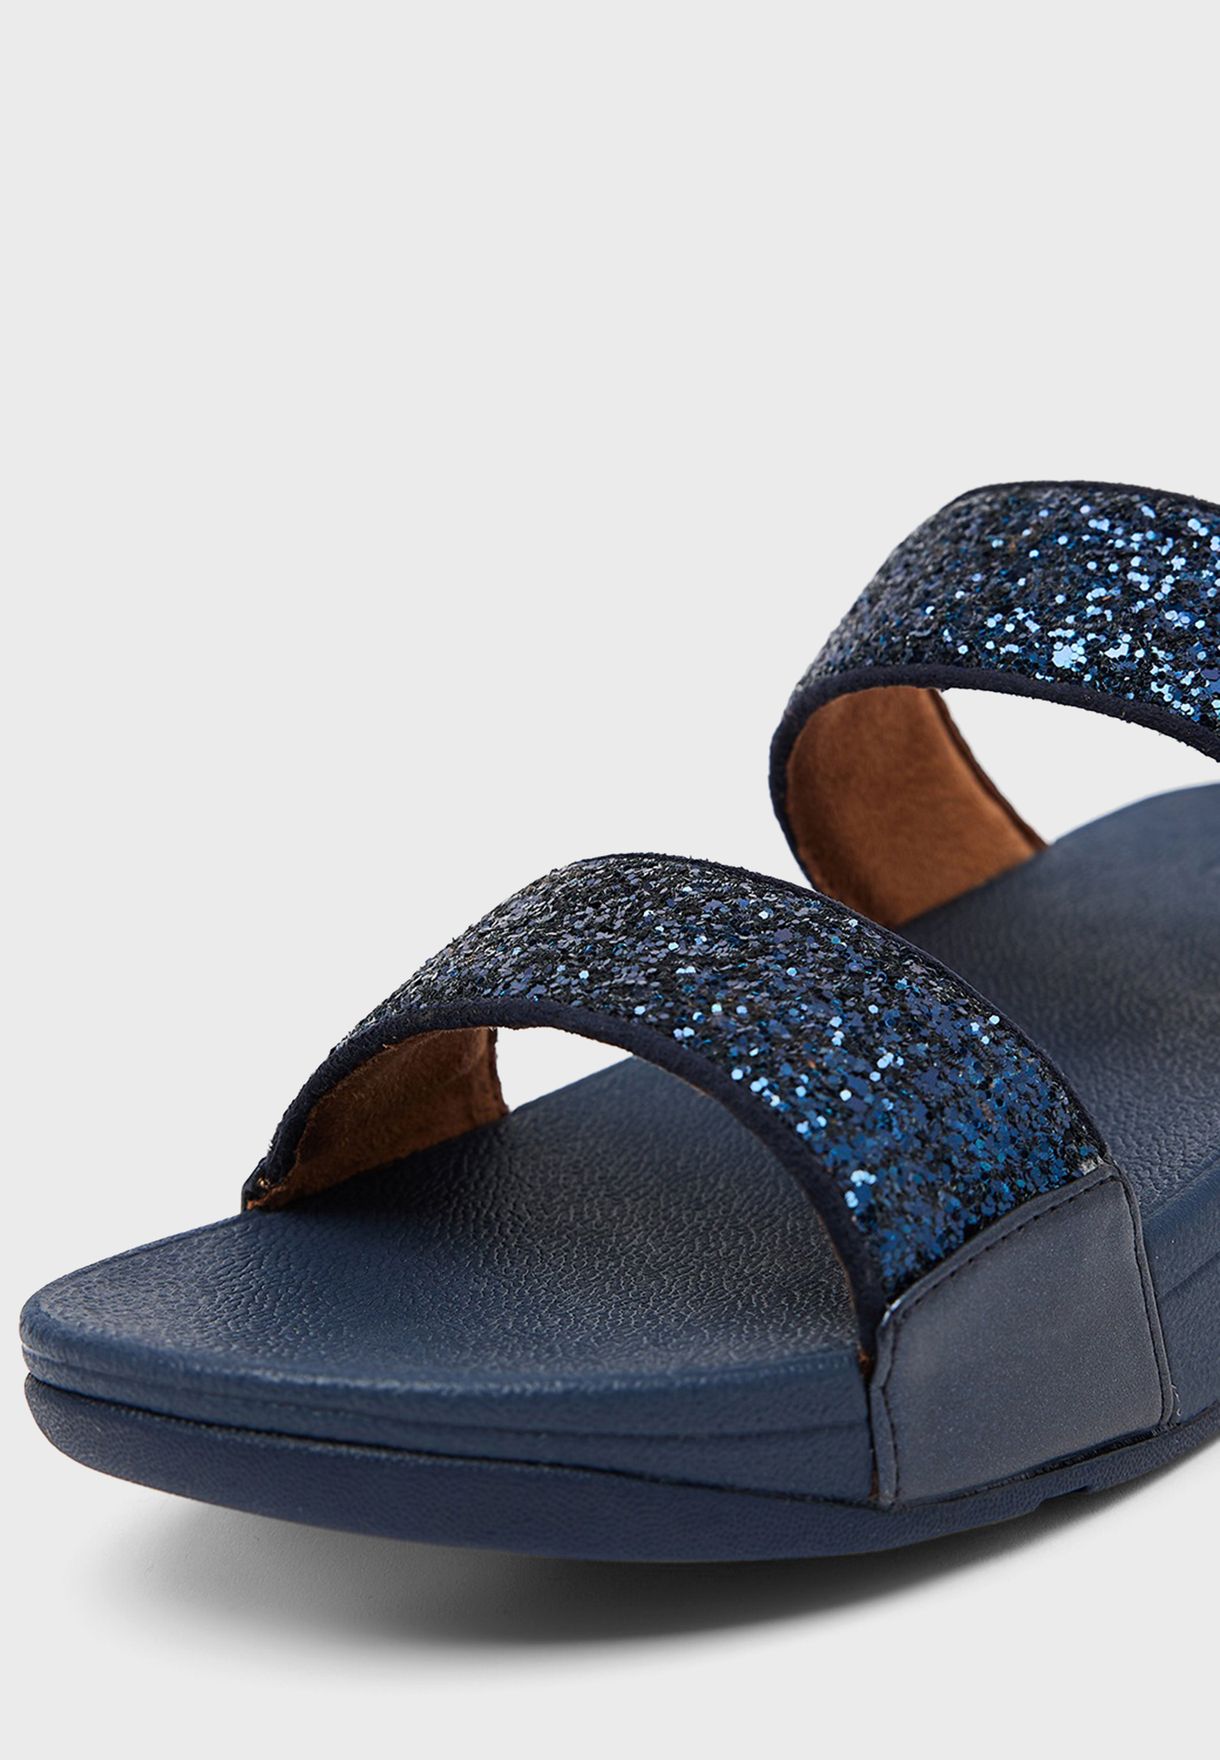 Lulu Glitter Comfort Sandals